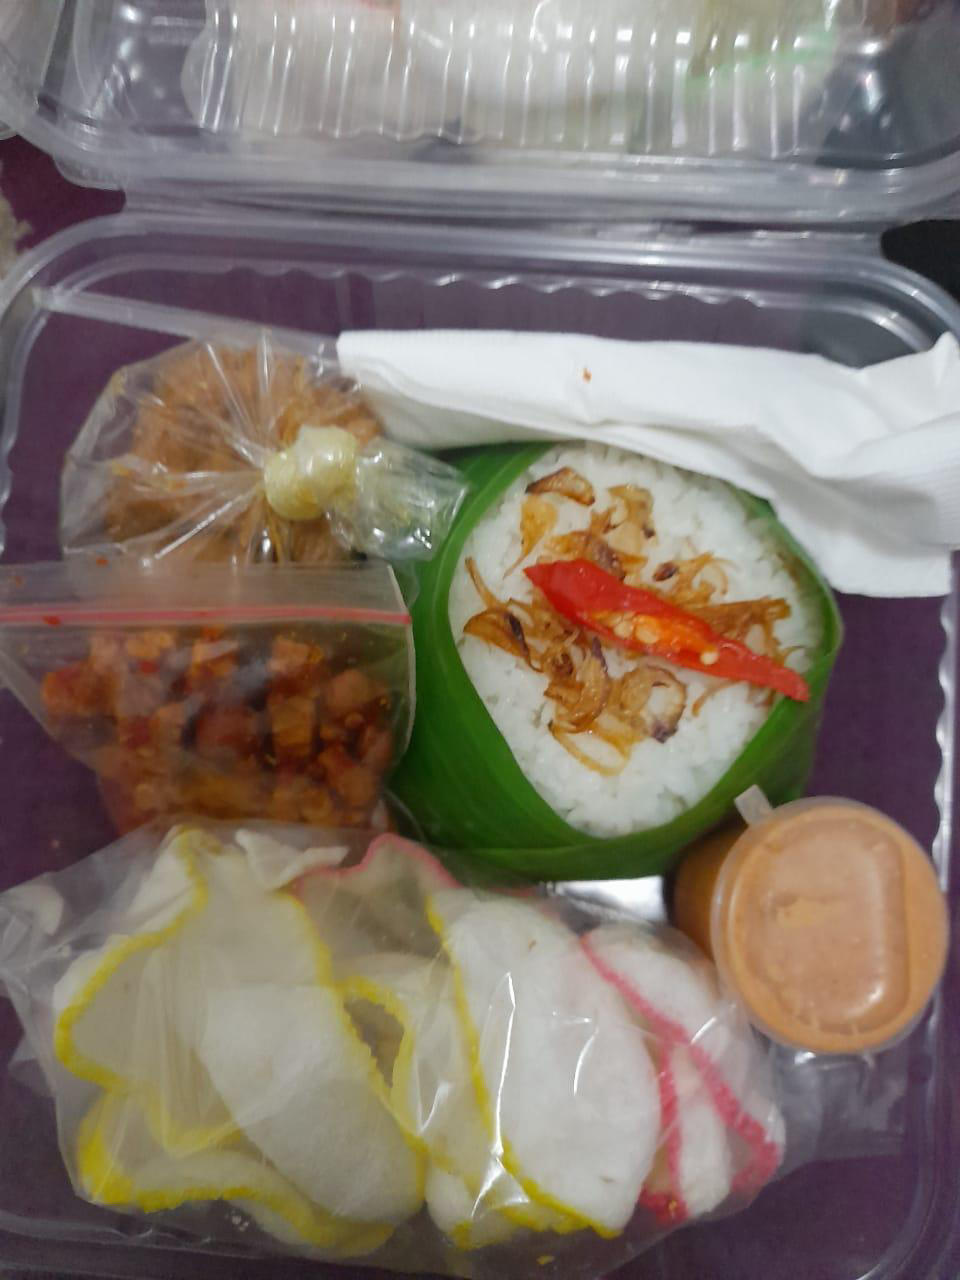 Paket Nasi Bakar
dapurtoemi1